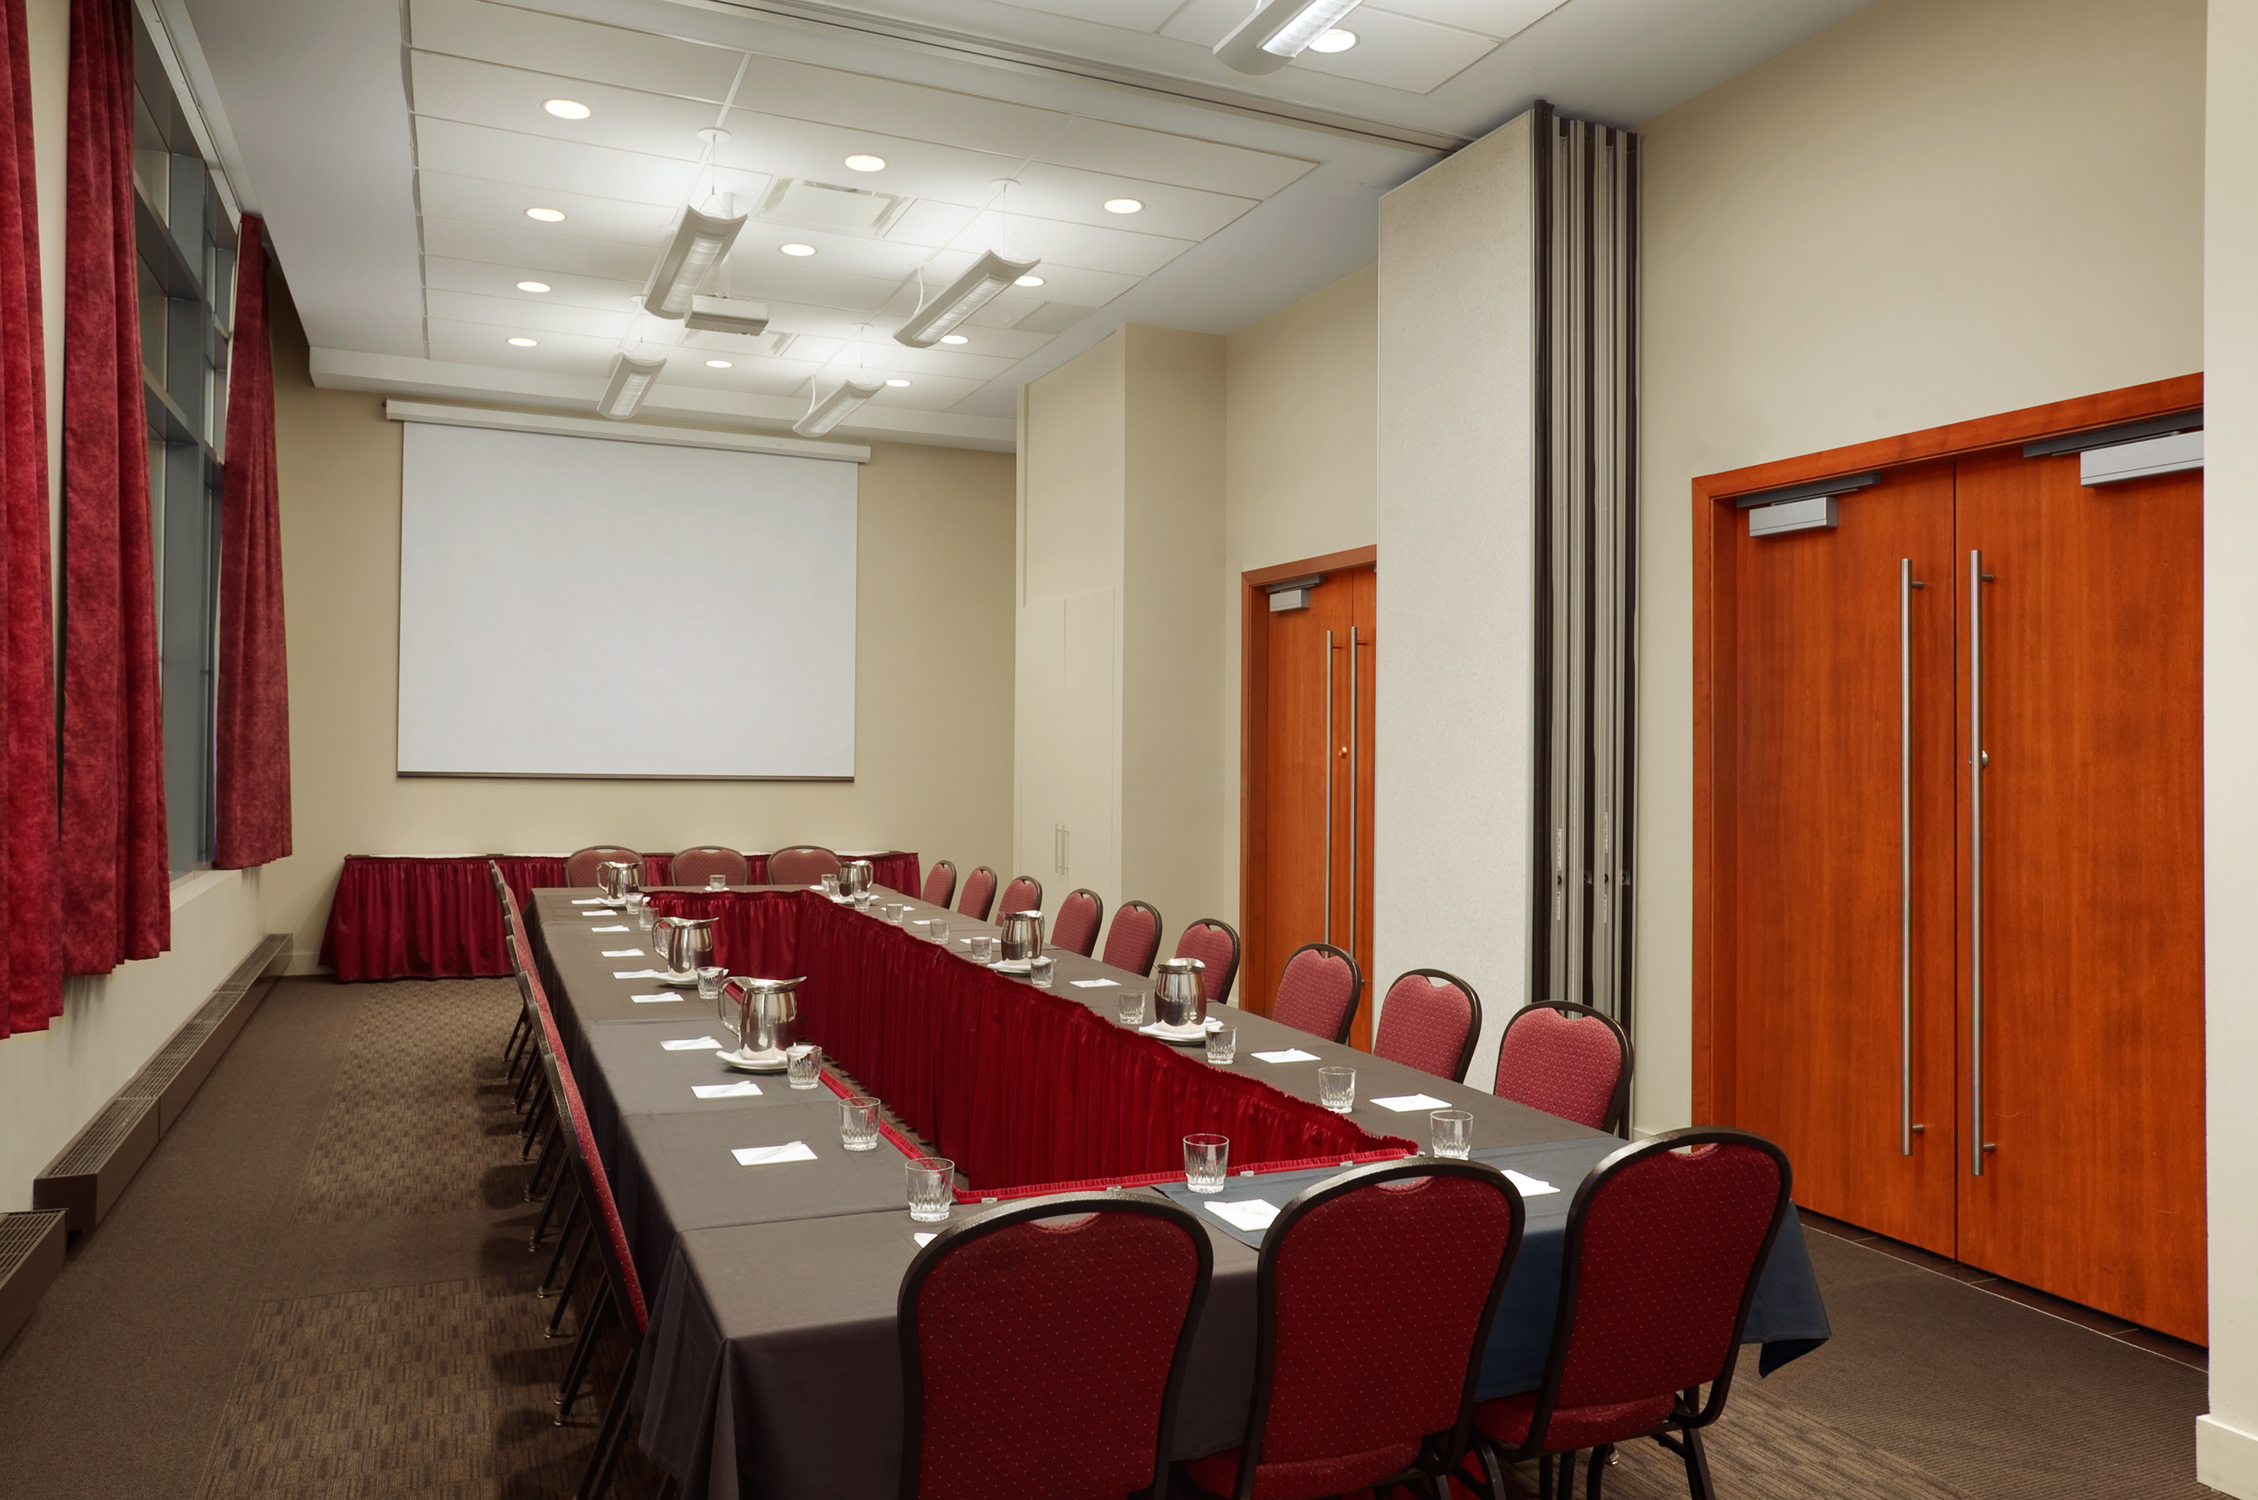 Meeting Room Conference Setup